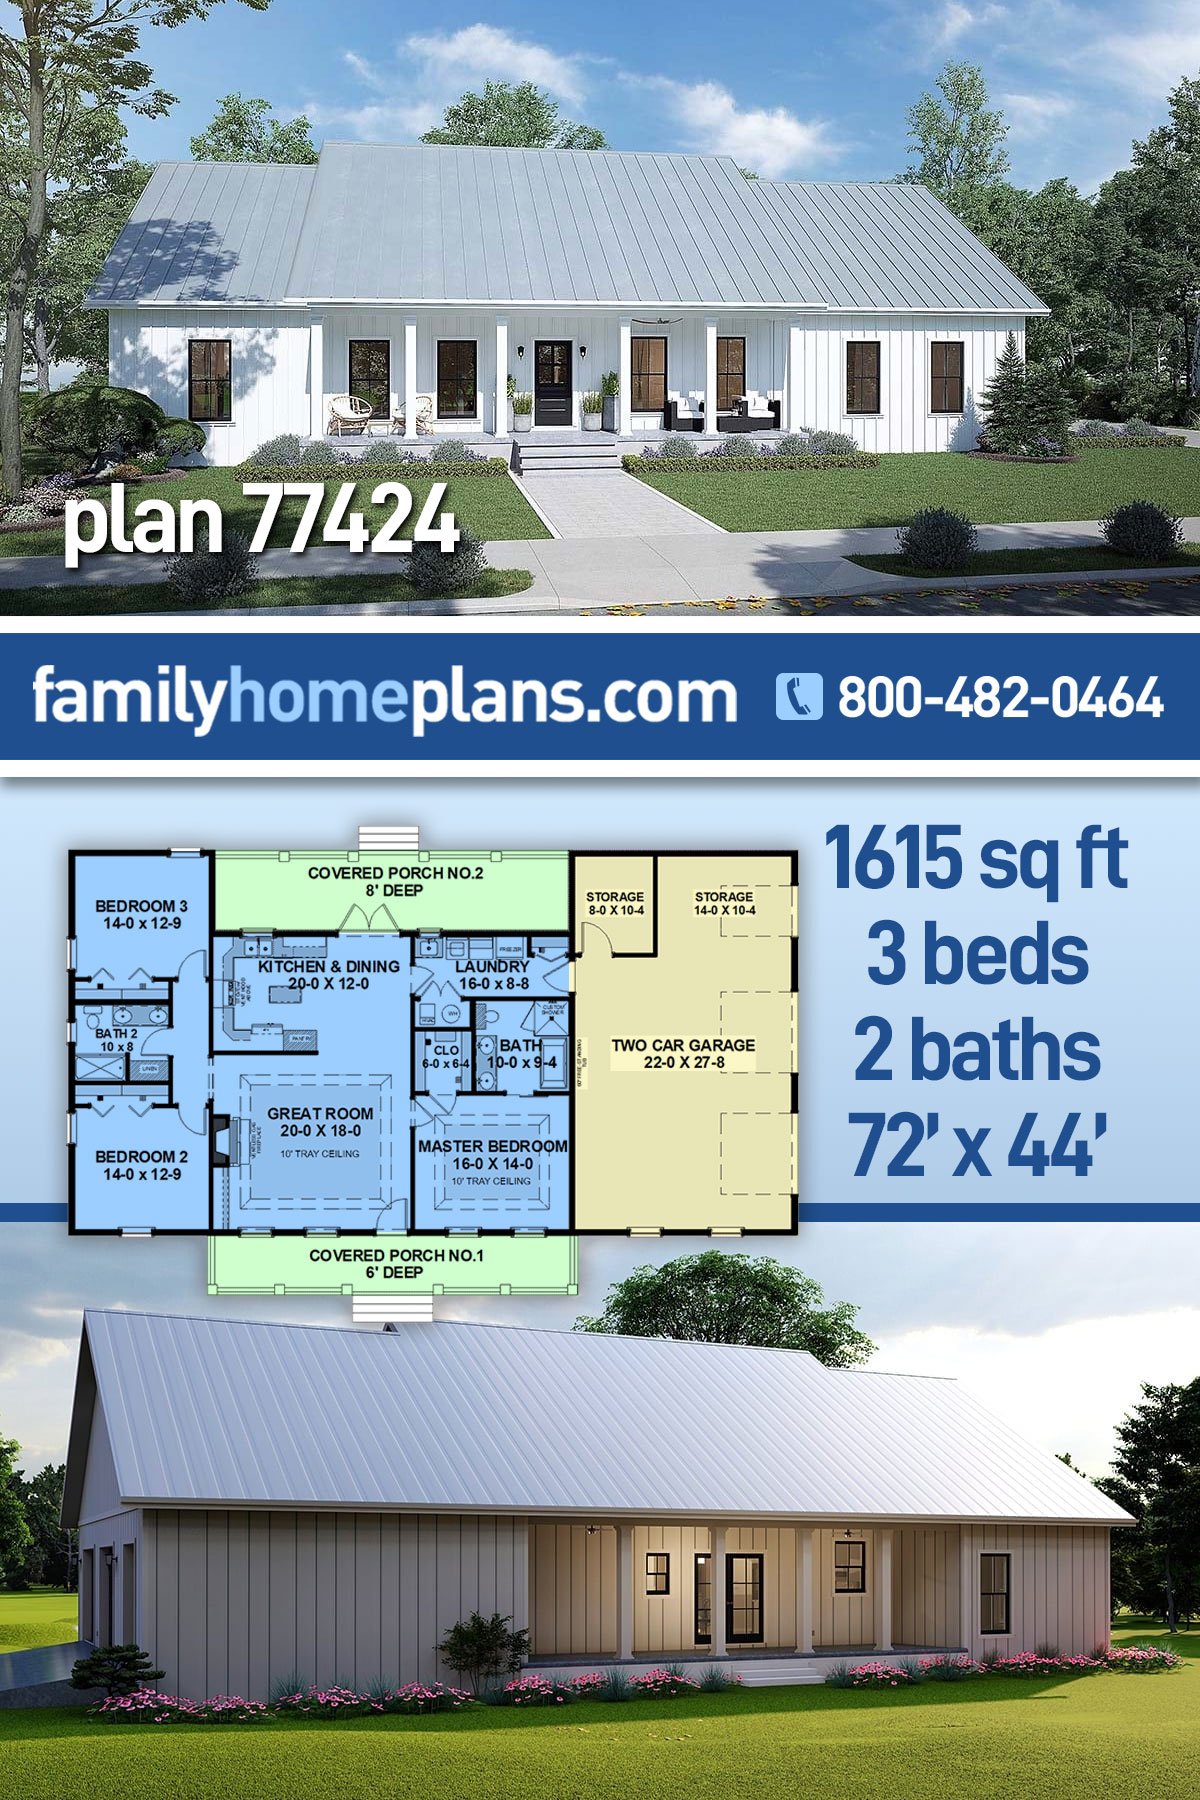 House Plan 77424